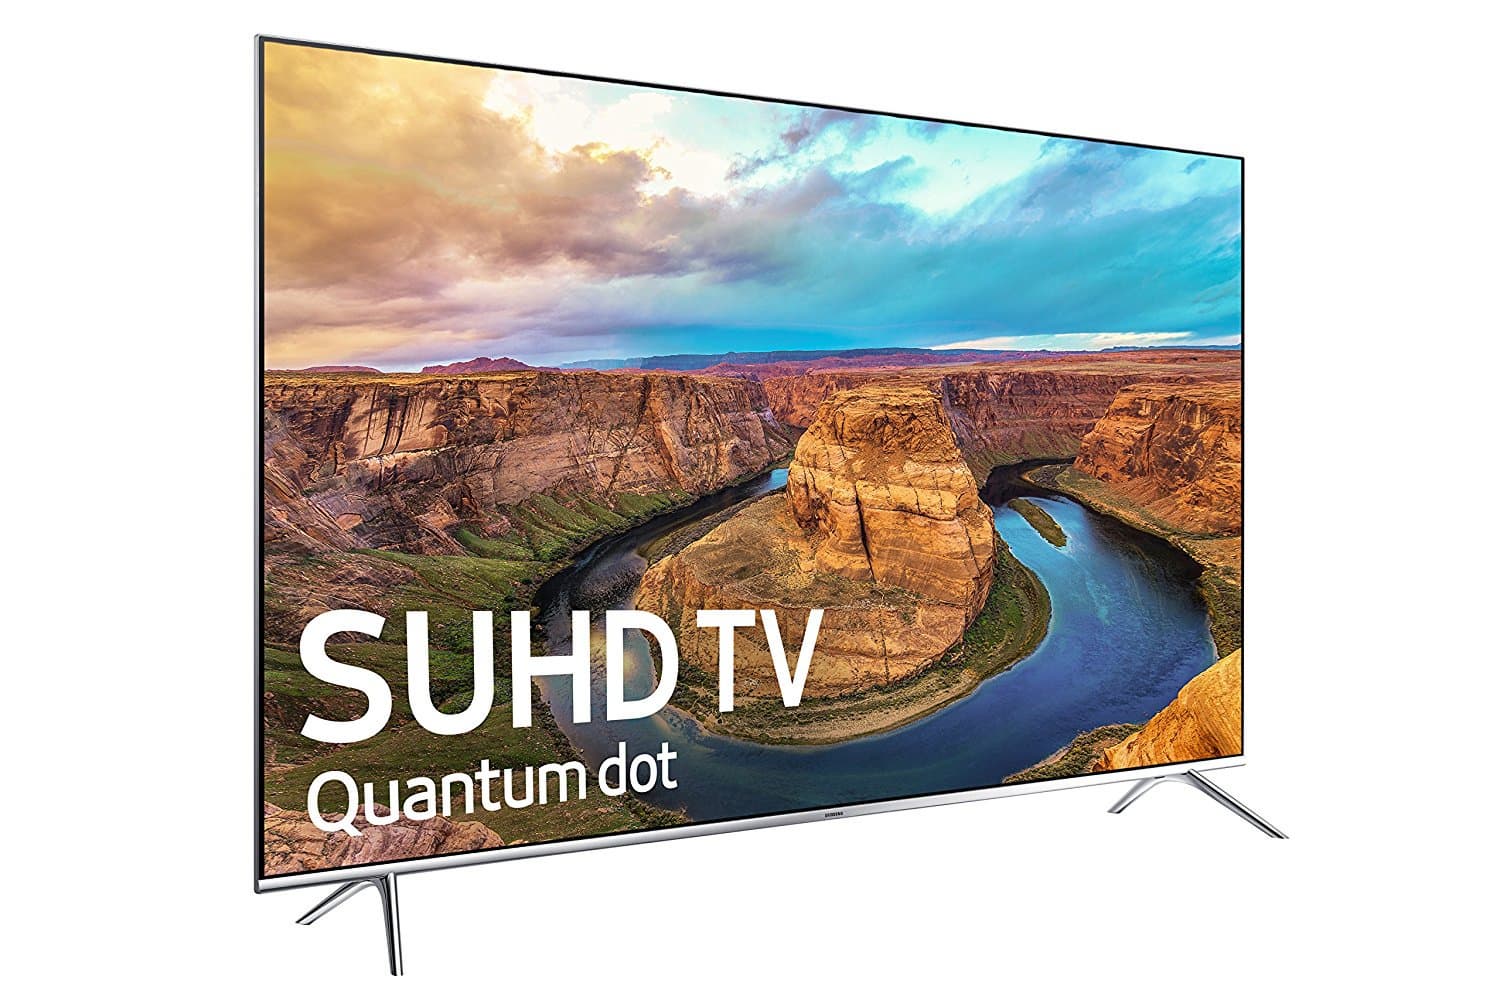 Samsung UN65KS8000 65_Inch 4K Ultra HD Smart LED TV _2016 Mo